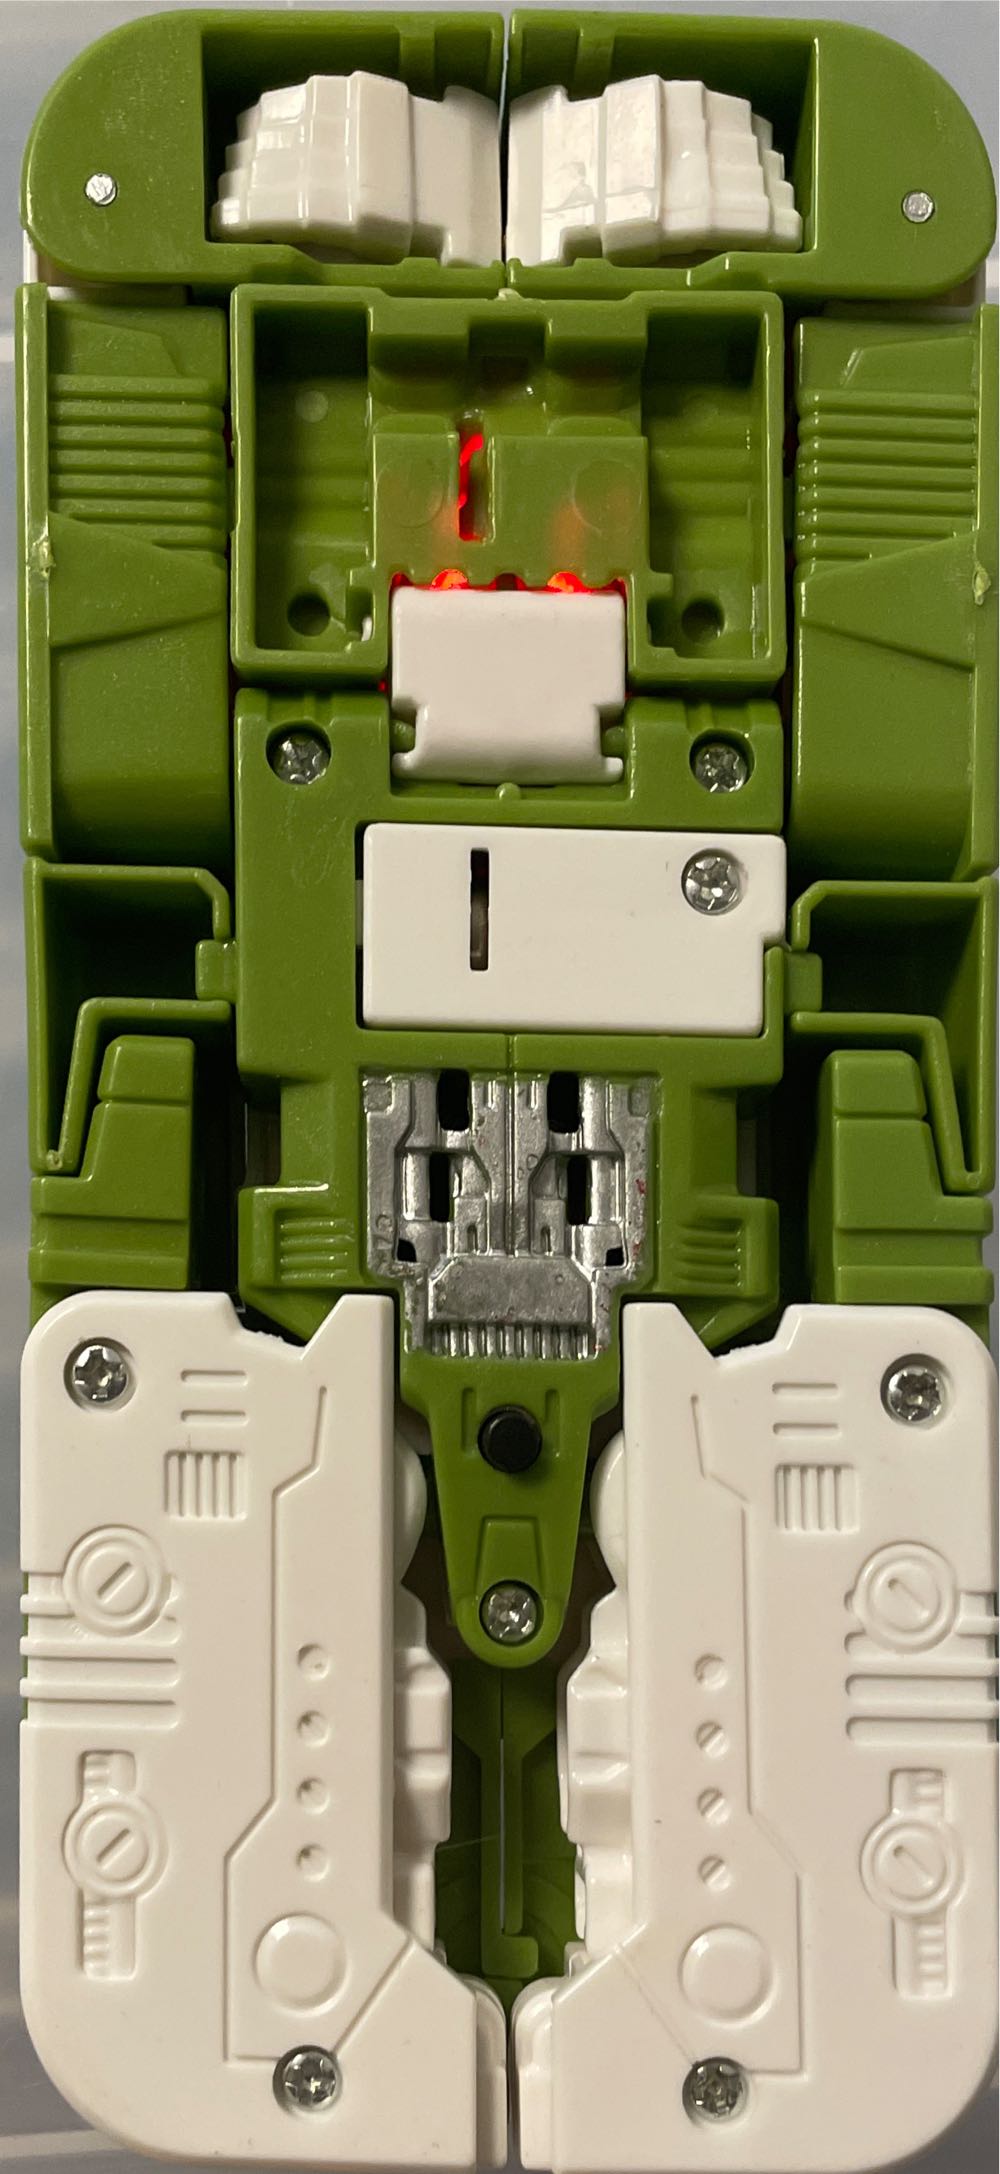 Mecha Robot Phone  action figure collectible - Main Image 2